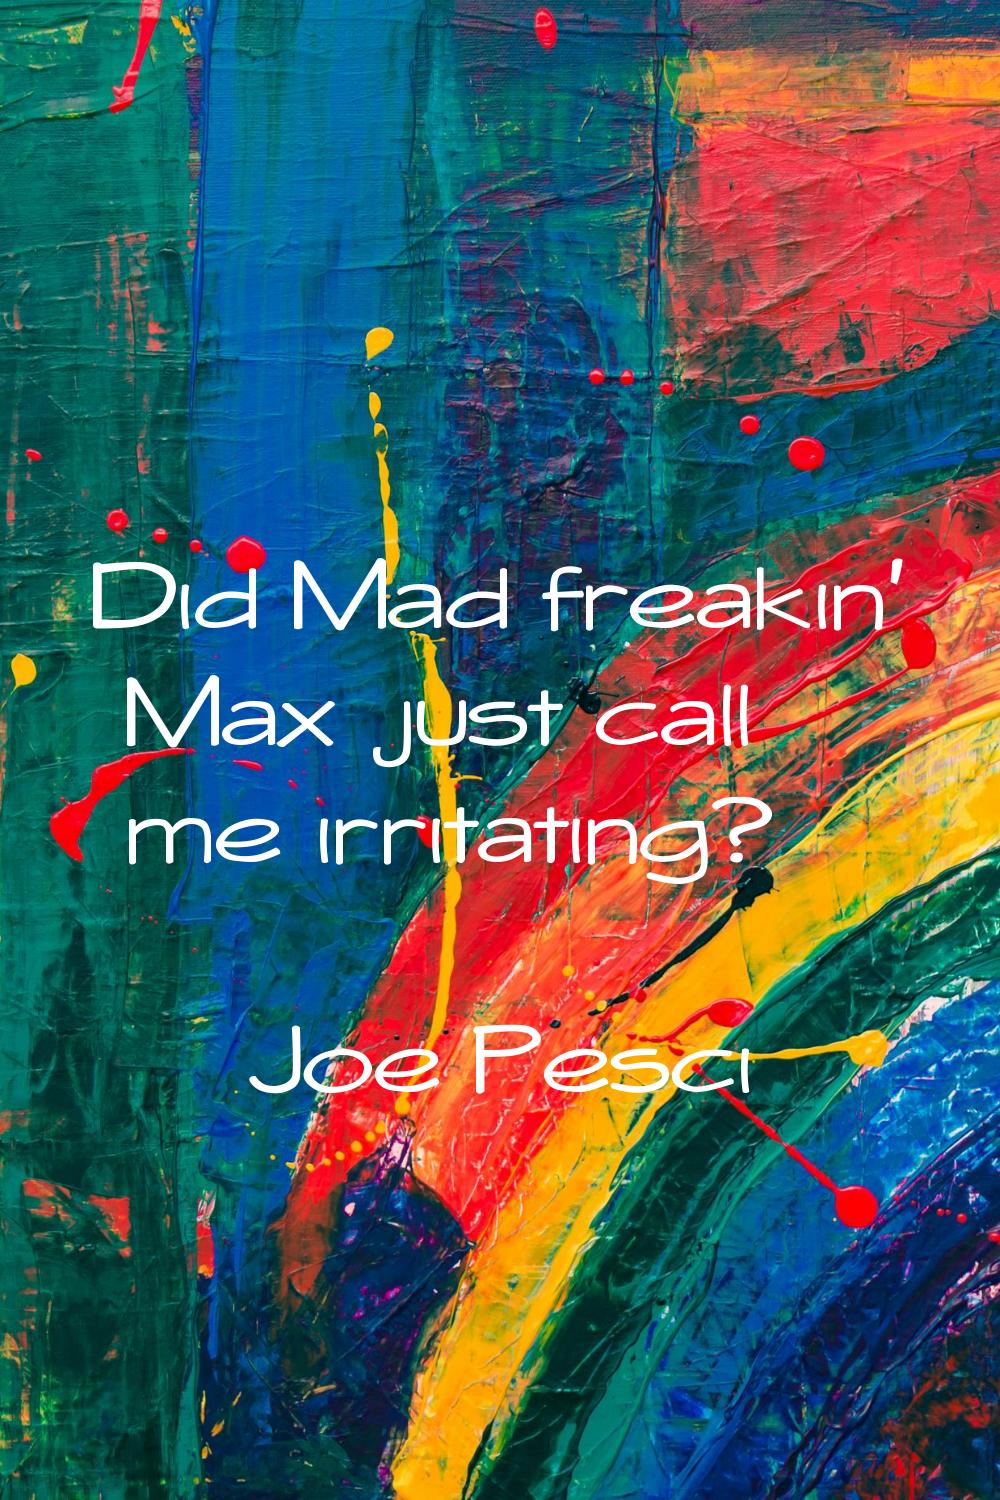 Did Mad freakin' Max just call me irritating?